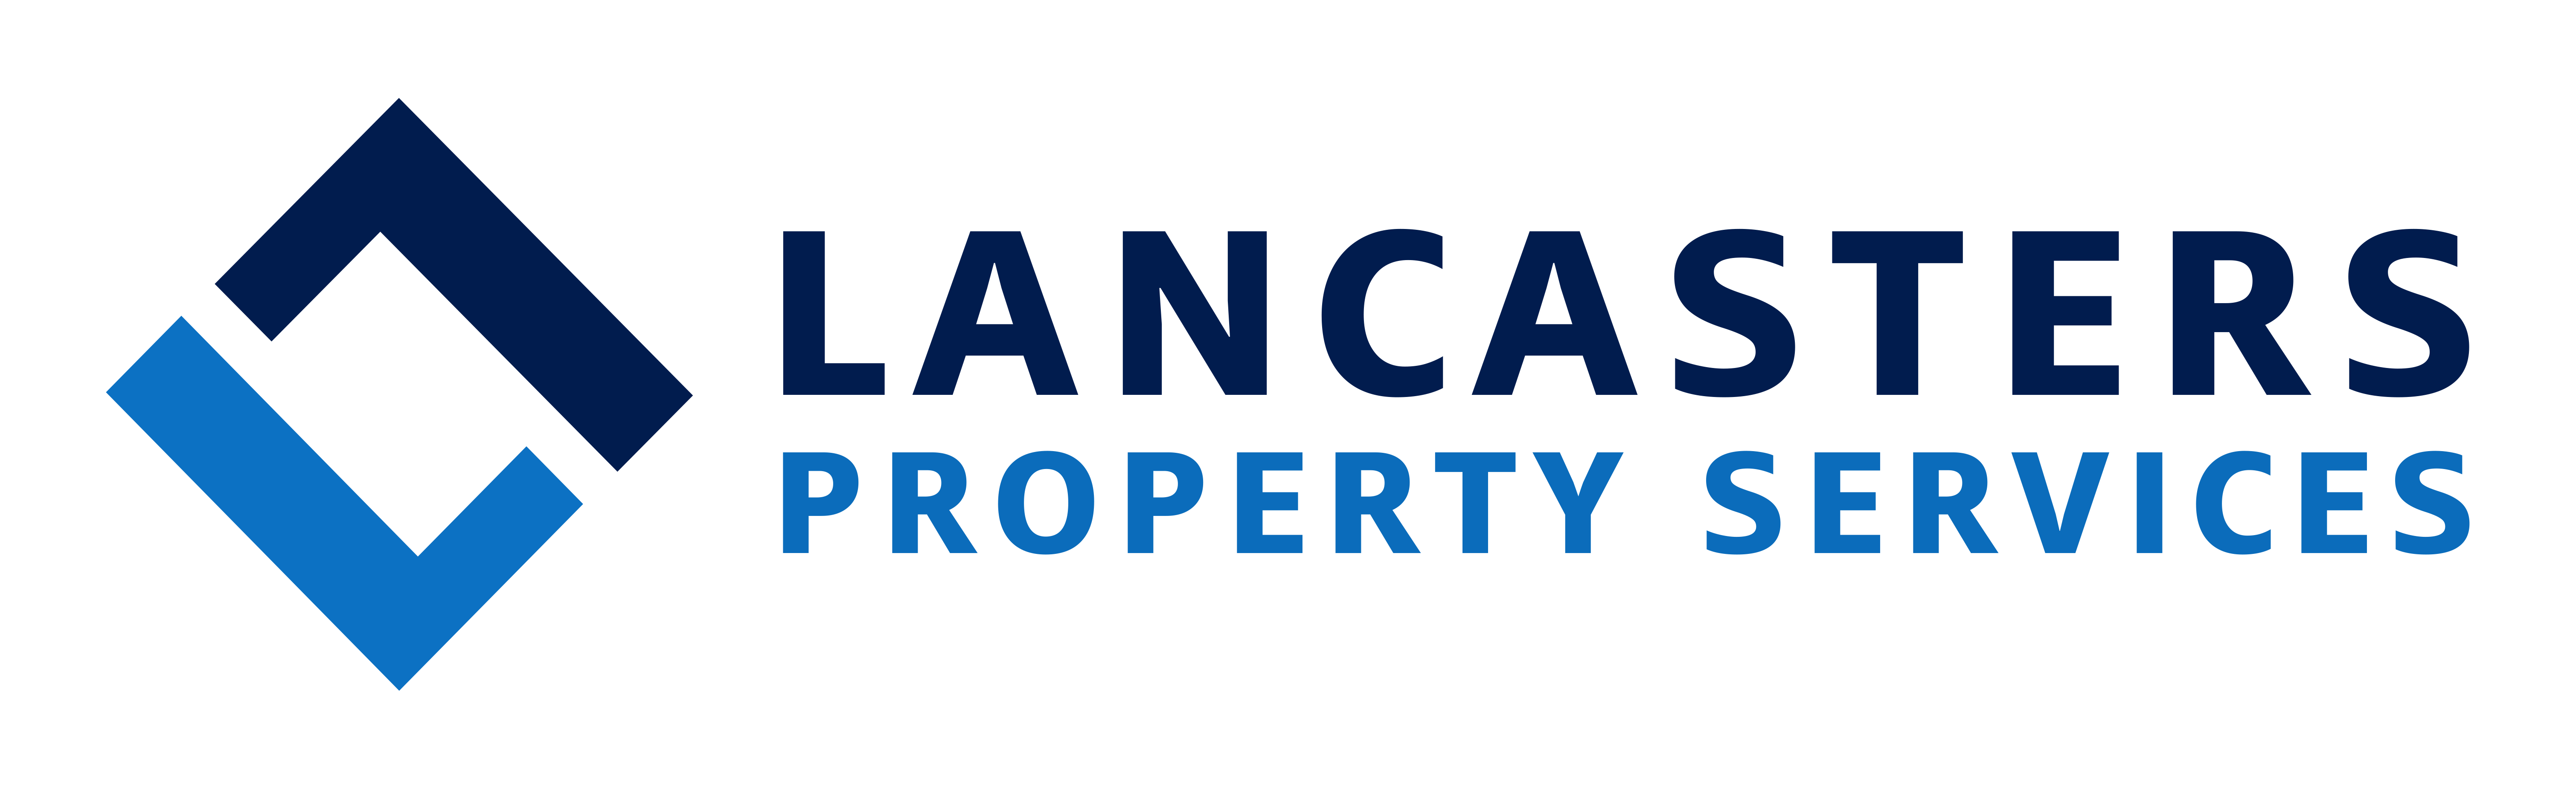 Lancasters Property Services